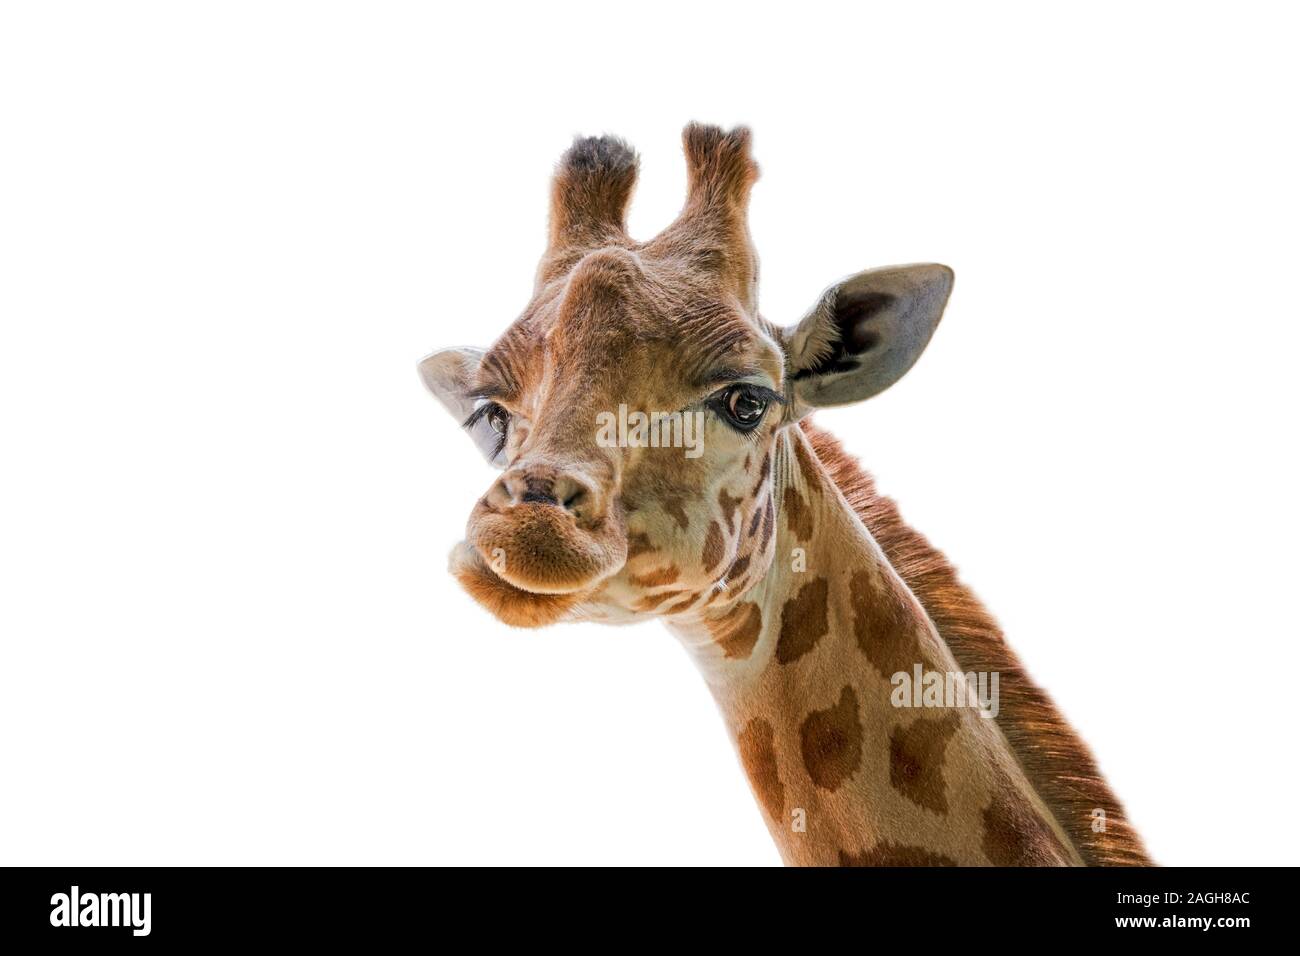 Kordofan giraffe (Giraffa camelopardalis antiquorum) close-up of head against white background Stock Photo